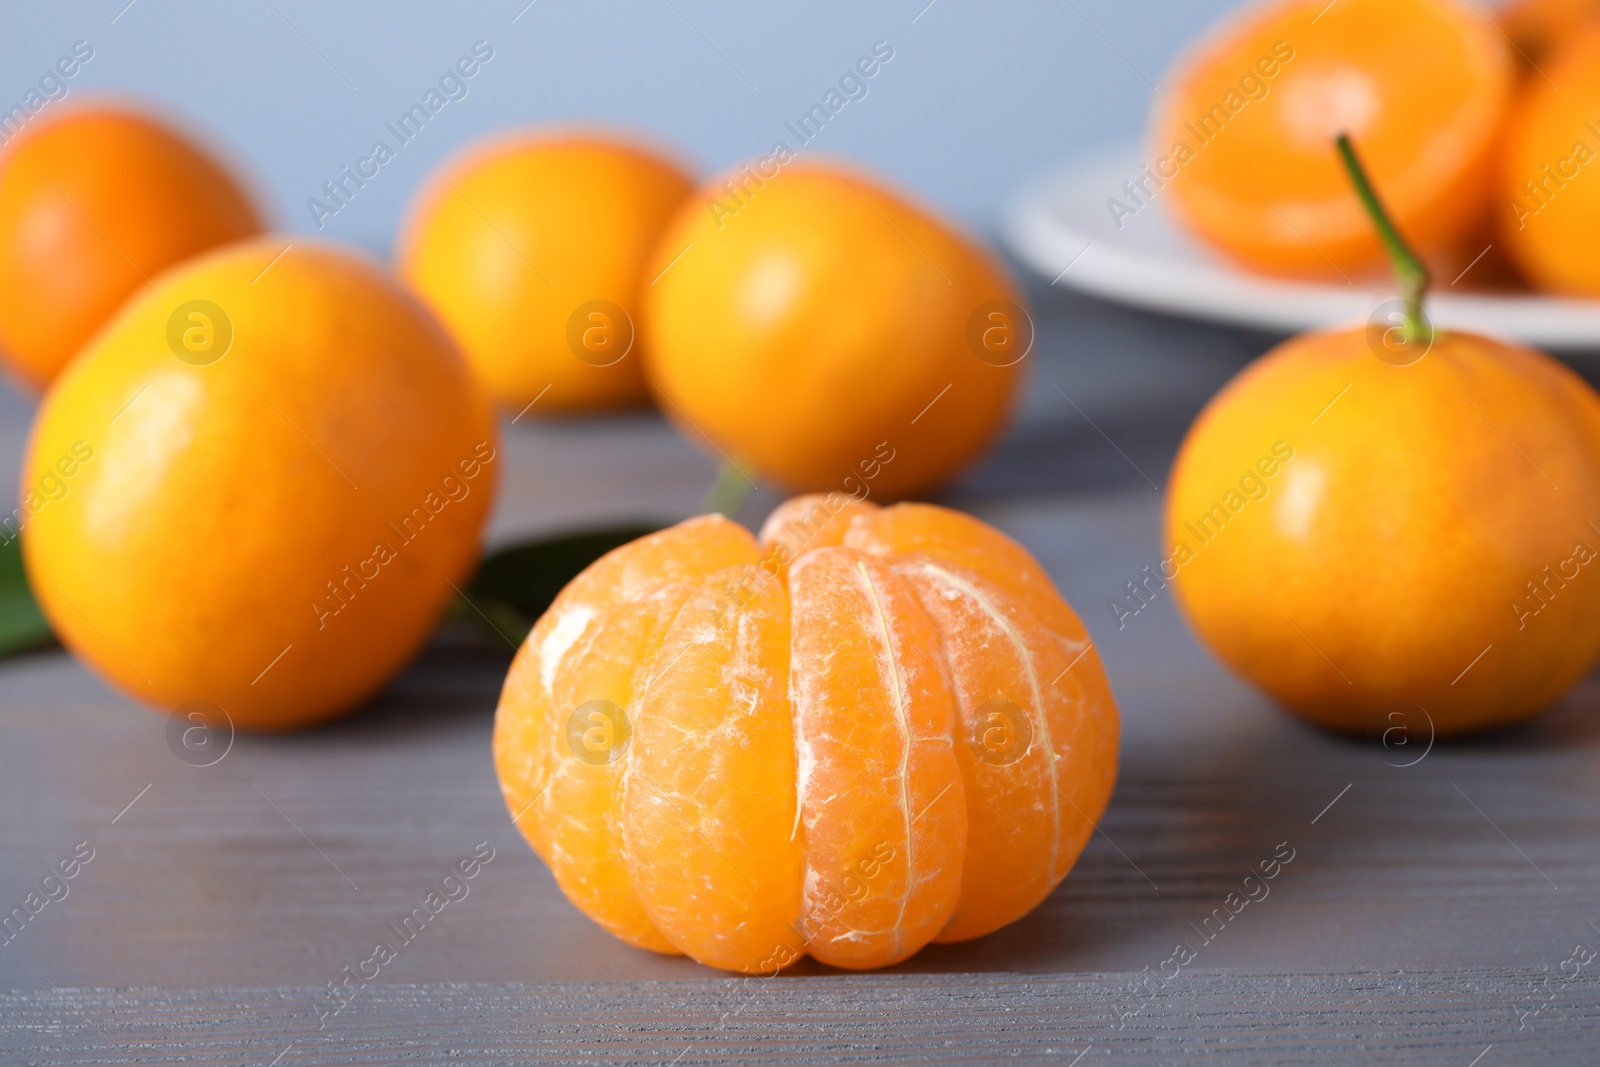 Photo of Peeled fresh ripe tangerine on grey wooden table, closeup